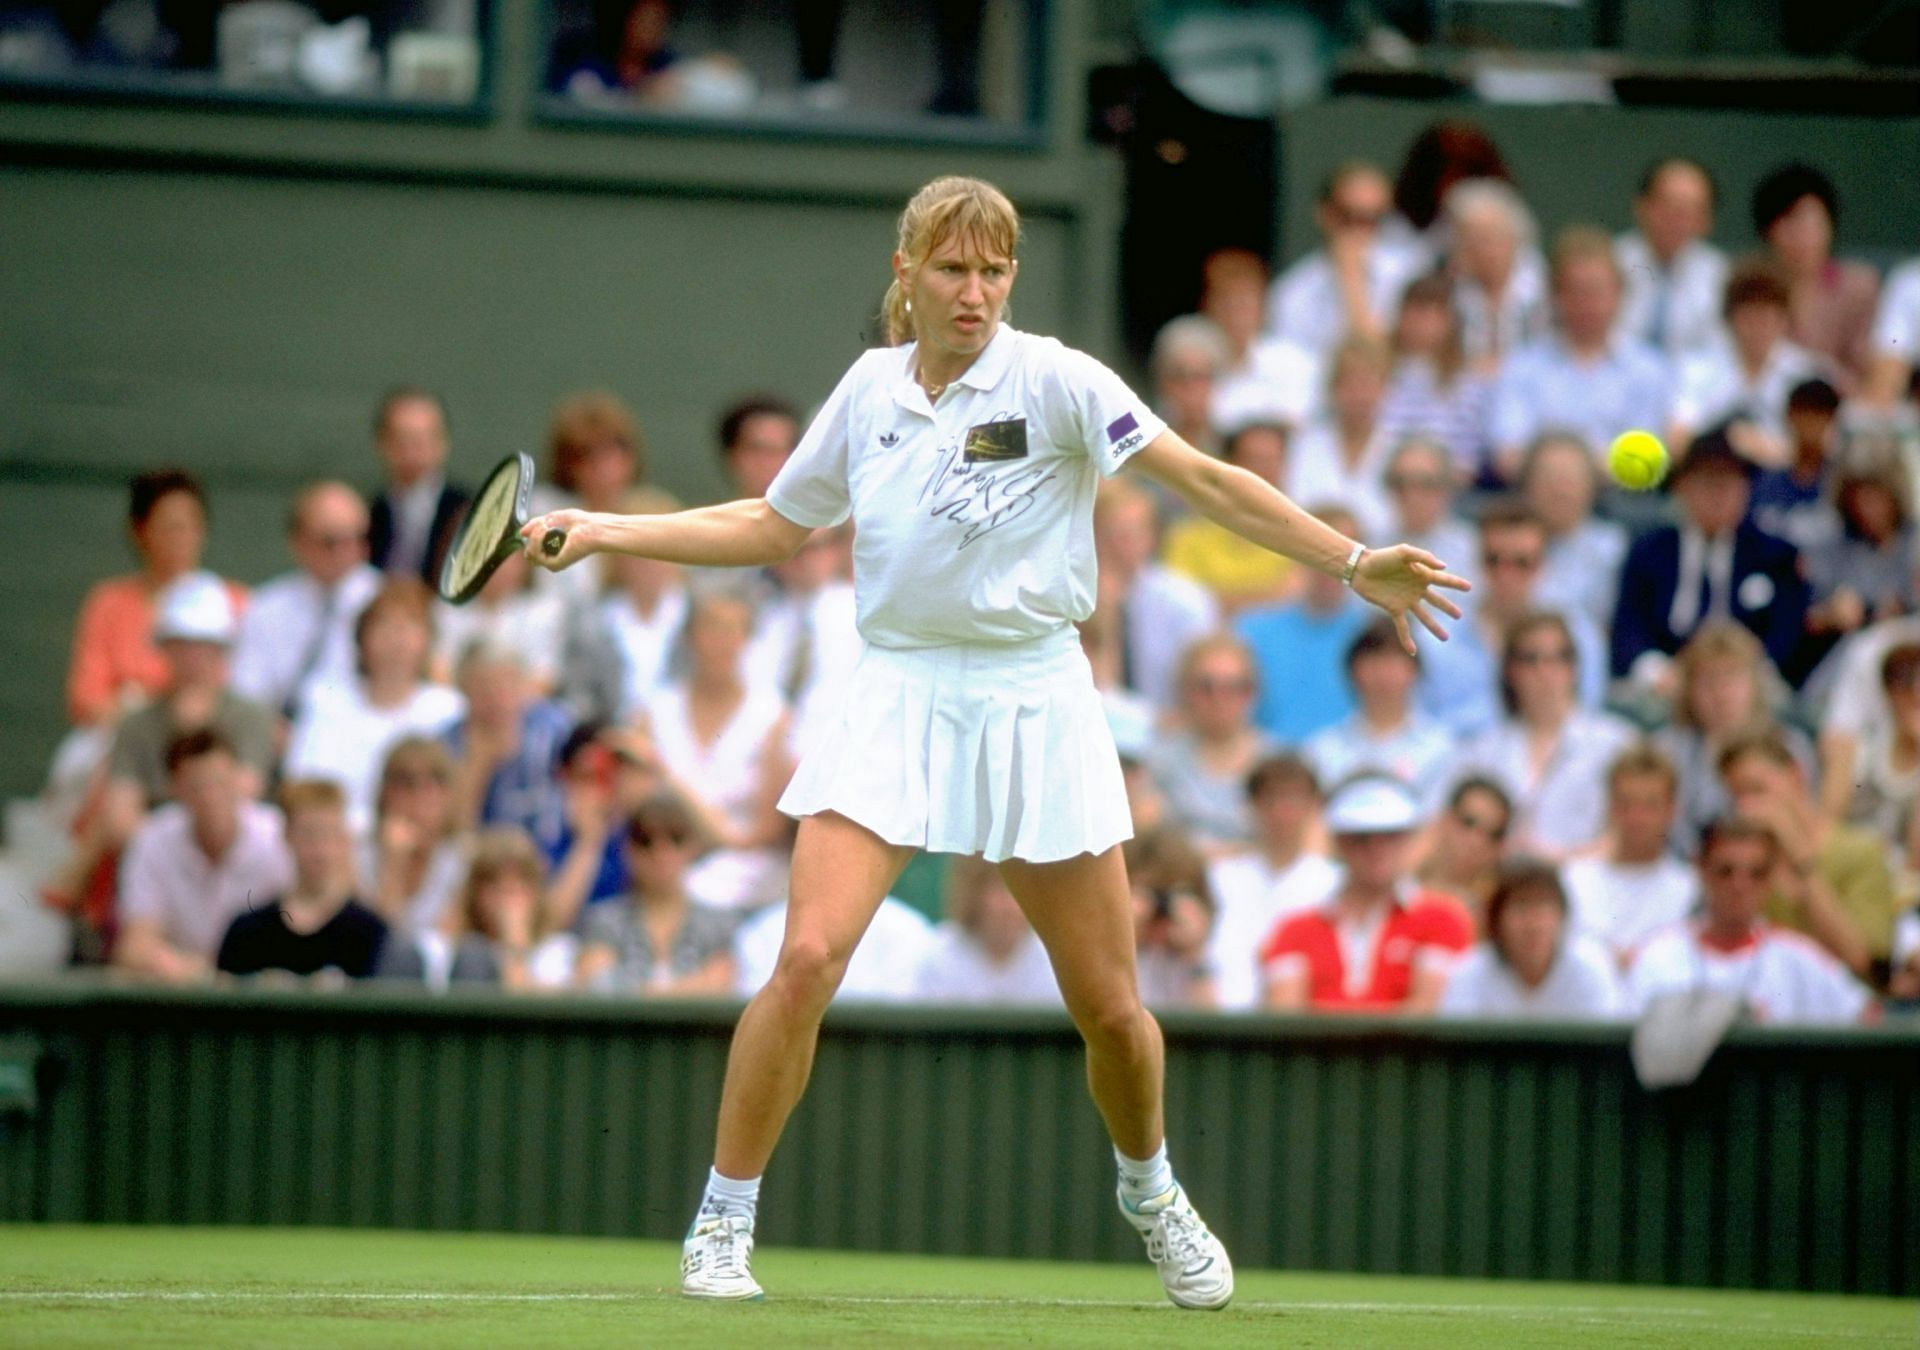 Steffi Graf became World No. 1 in 1987